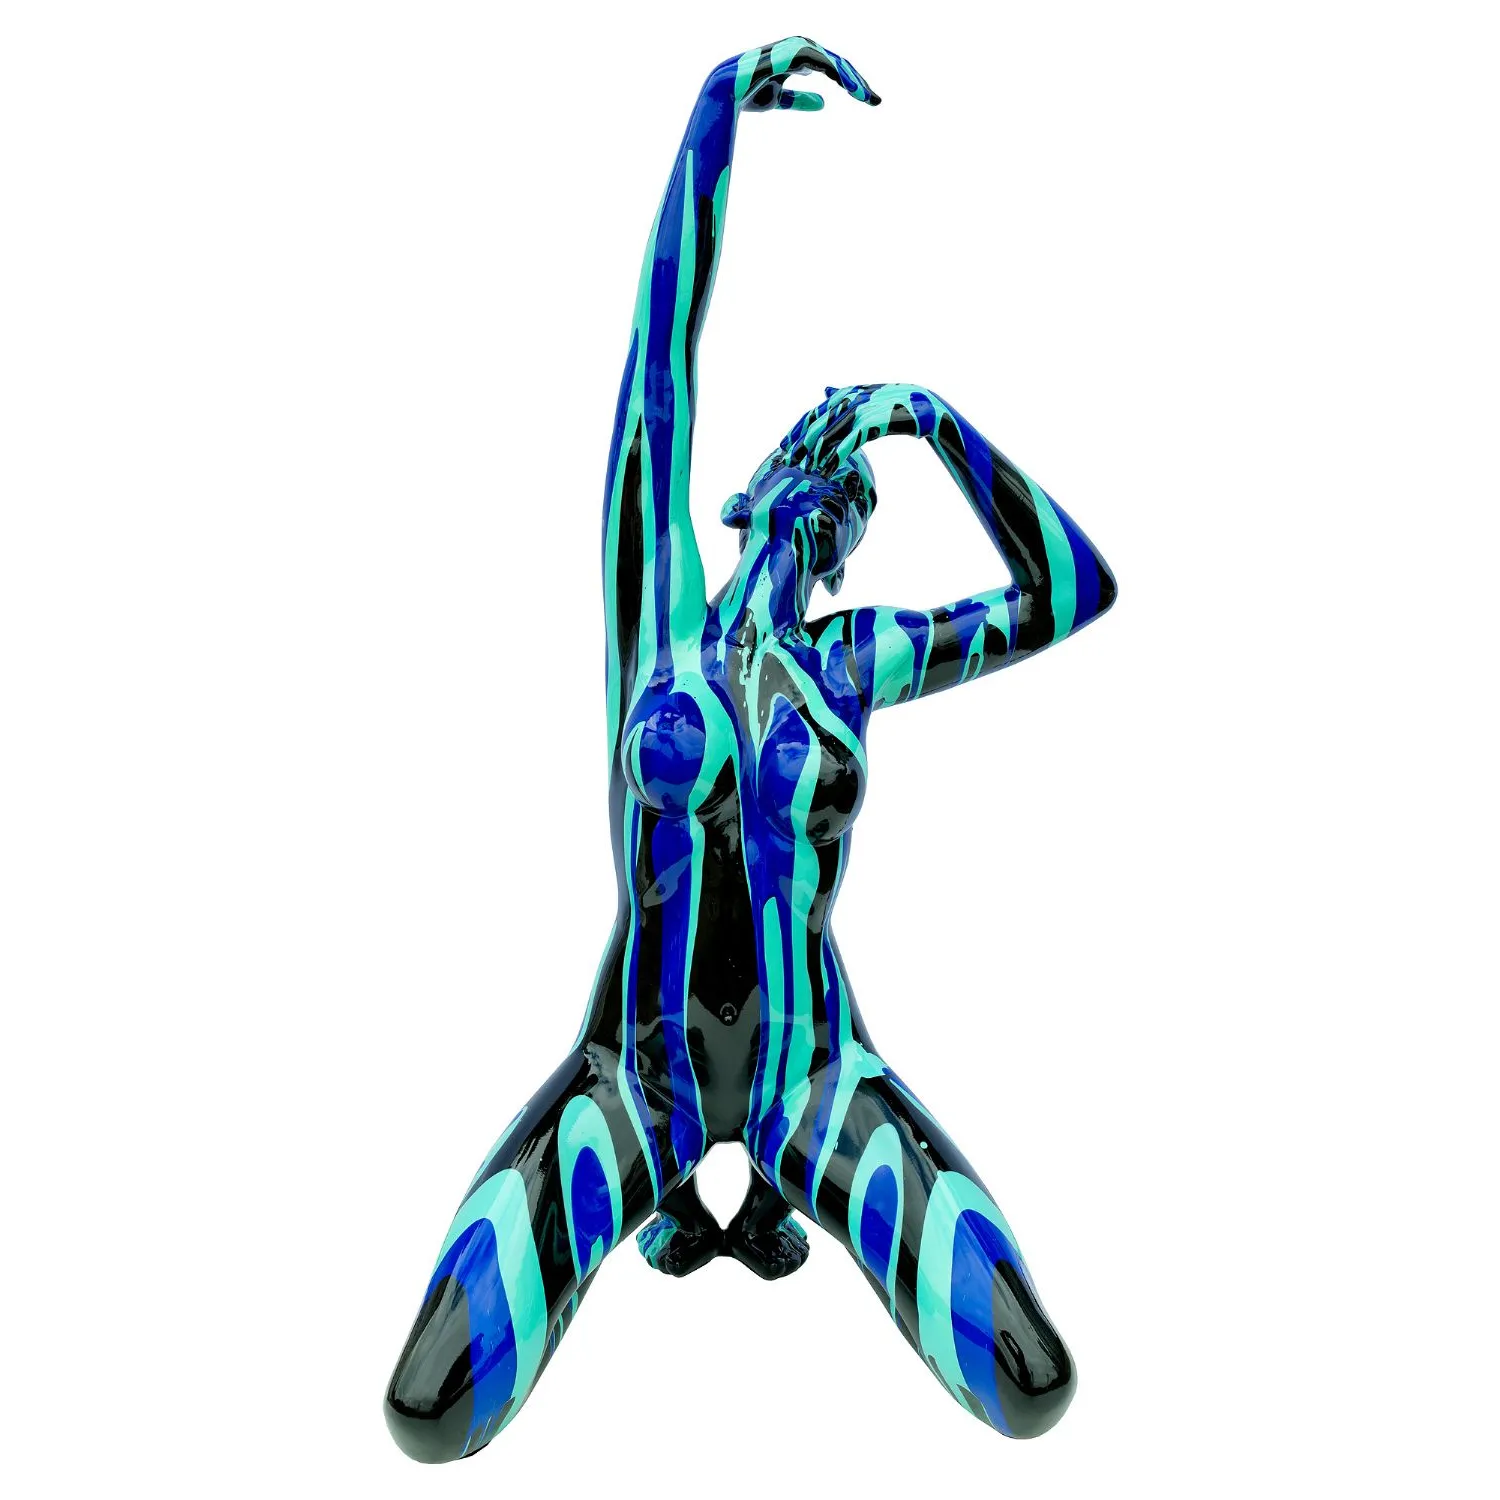 Amorous Large Black and Blue Yoga Lady Sculpture